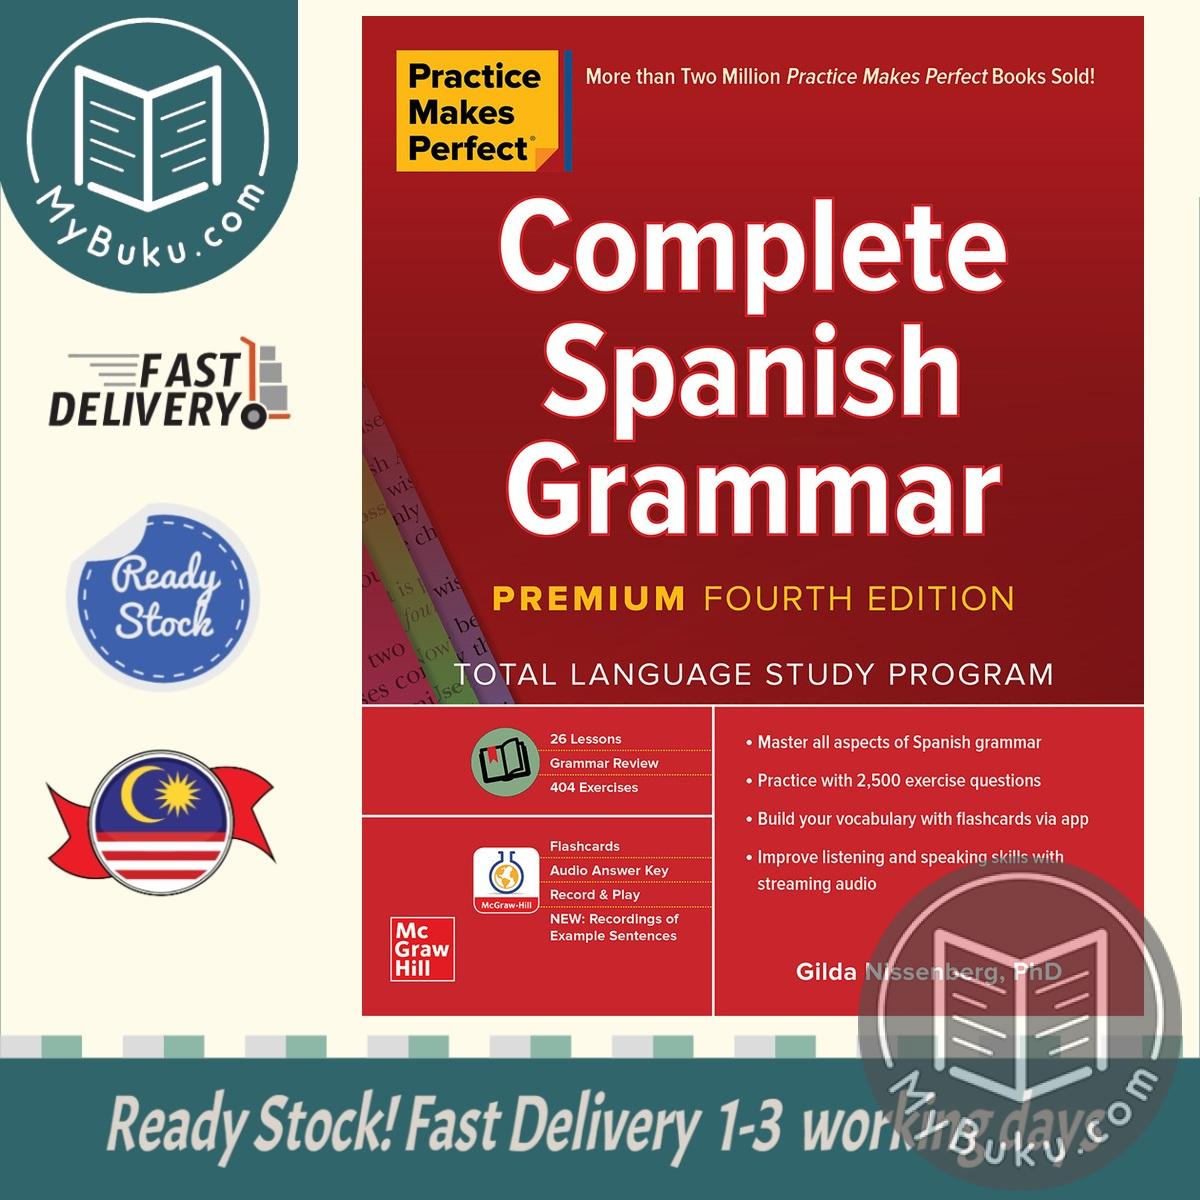 Practice Makes Perfect: Complete Spanish Grammar 4th Ed - Gilda Nissenberg - 9781260463156 - McGraw Hill